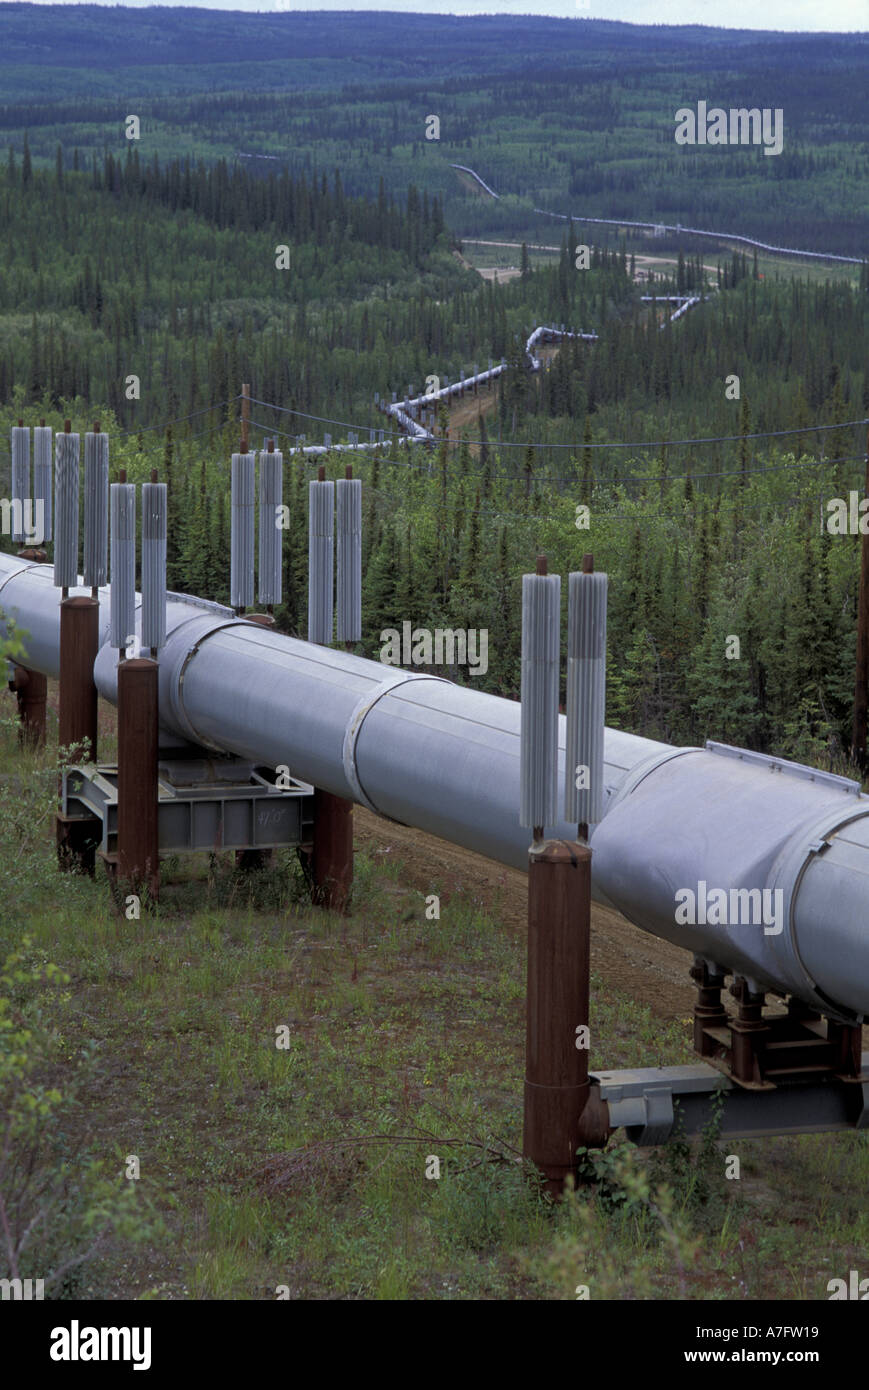 NA, USA, Alaska. Trans-Alaska oil pipeline snakes through spruce forest near Yukon River Stock Photo